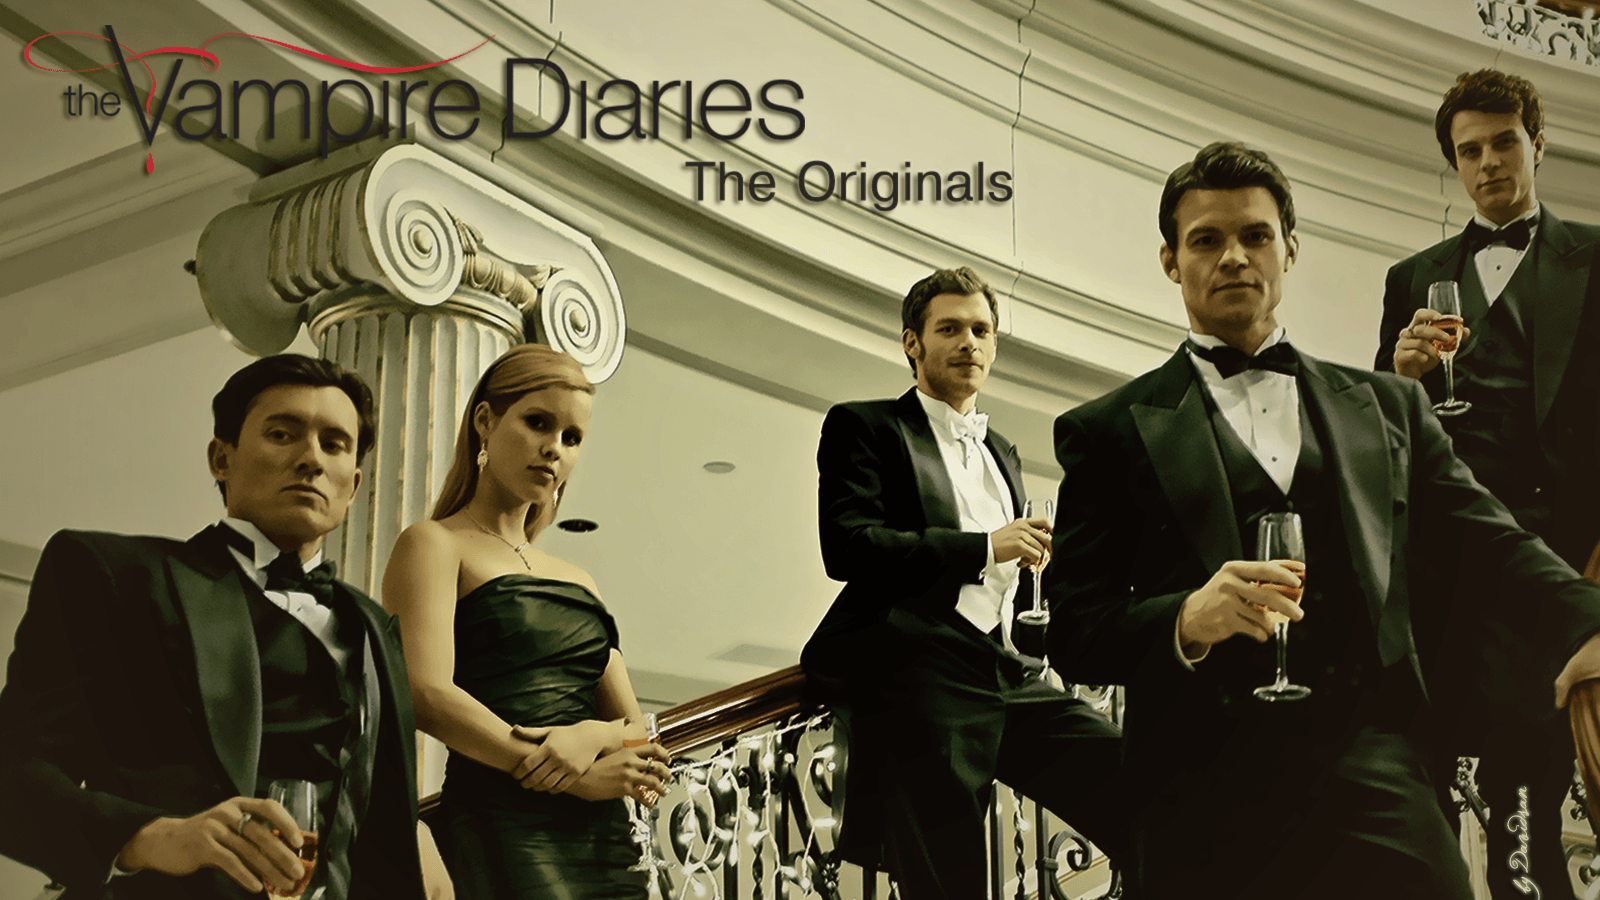 The Originals Family [Wallpaper]